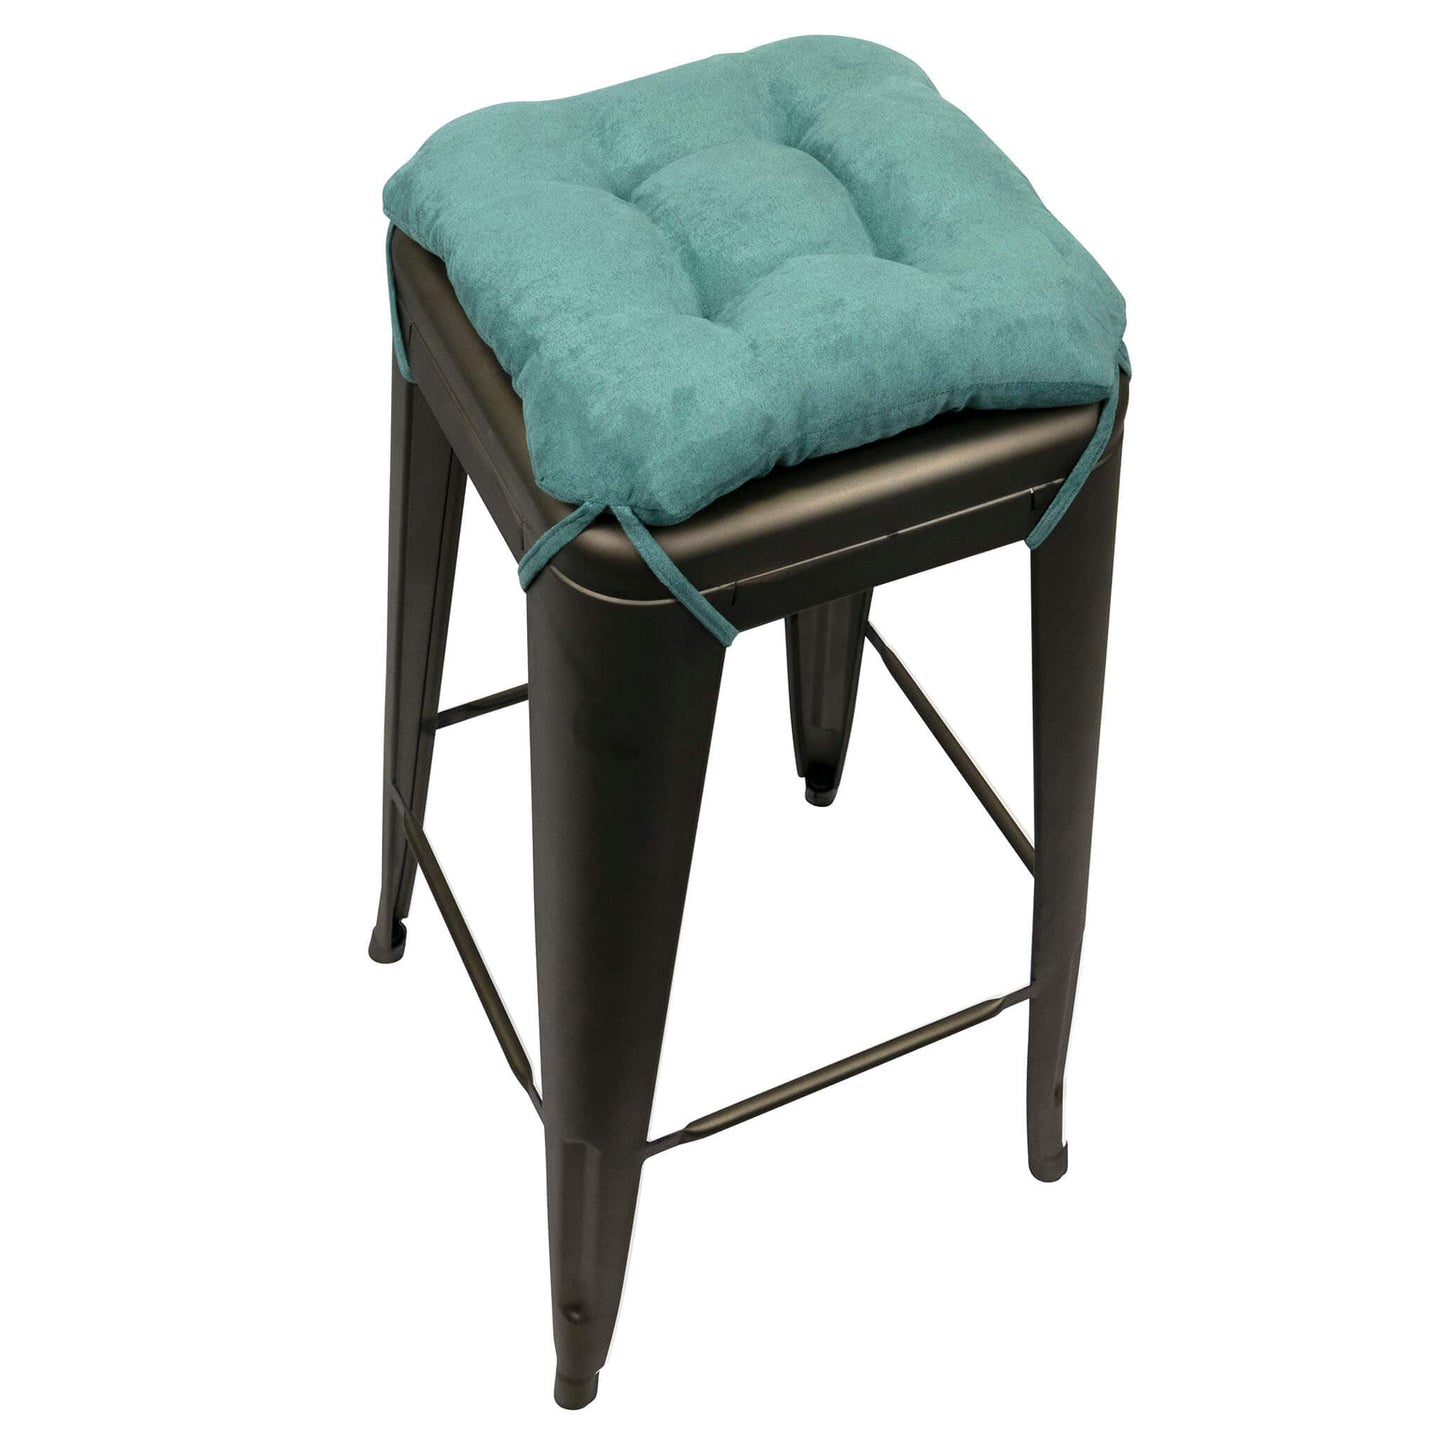 Micro-suede Turquoise Square Industrial Bar Stool Cushion - Latex Foam Fill - Barnett Home Decor - Aqua - Sea Green